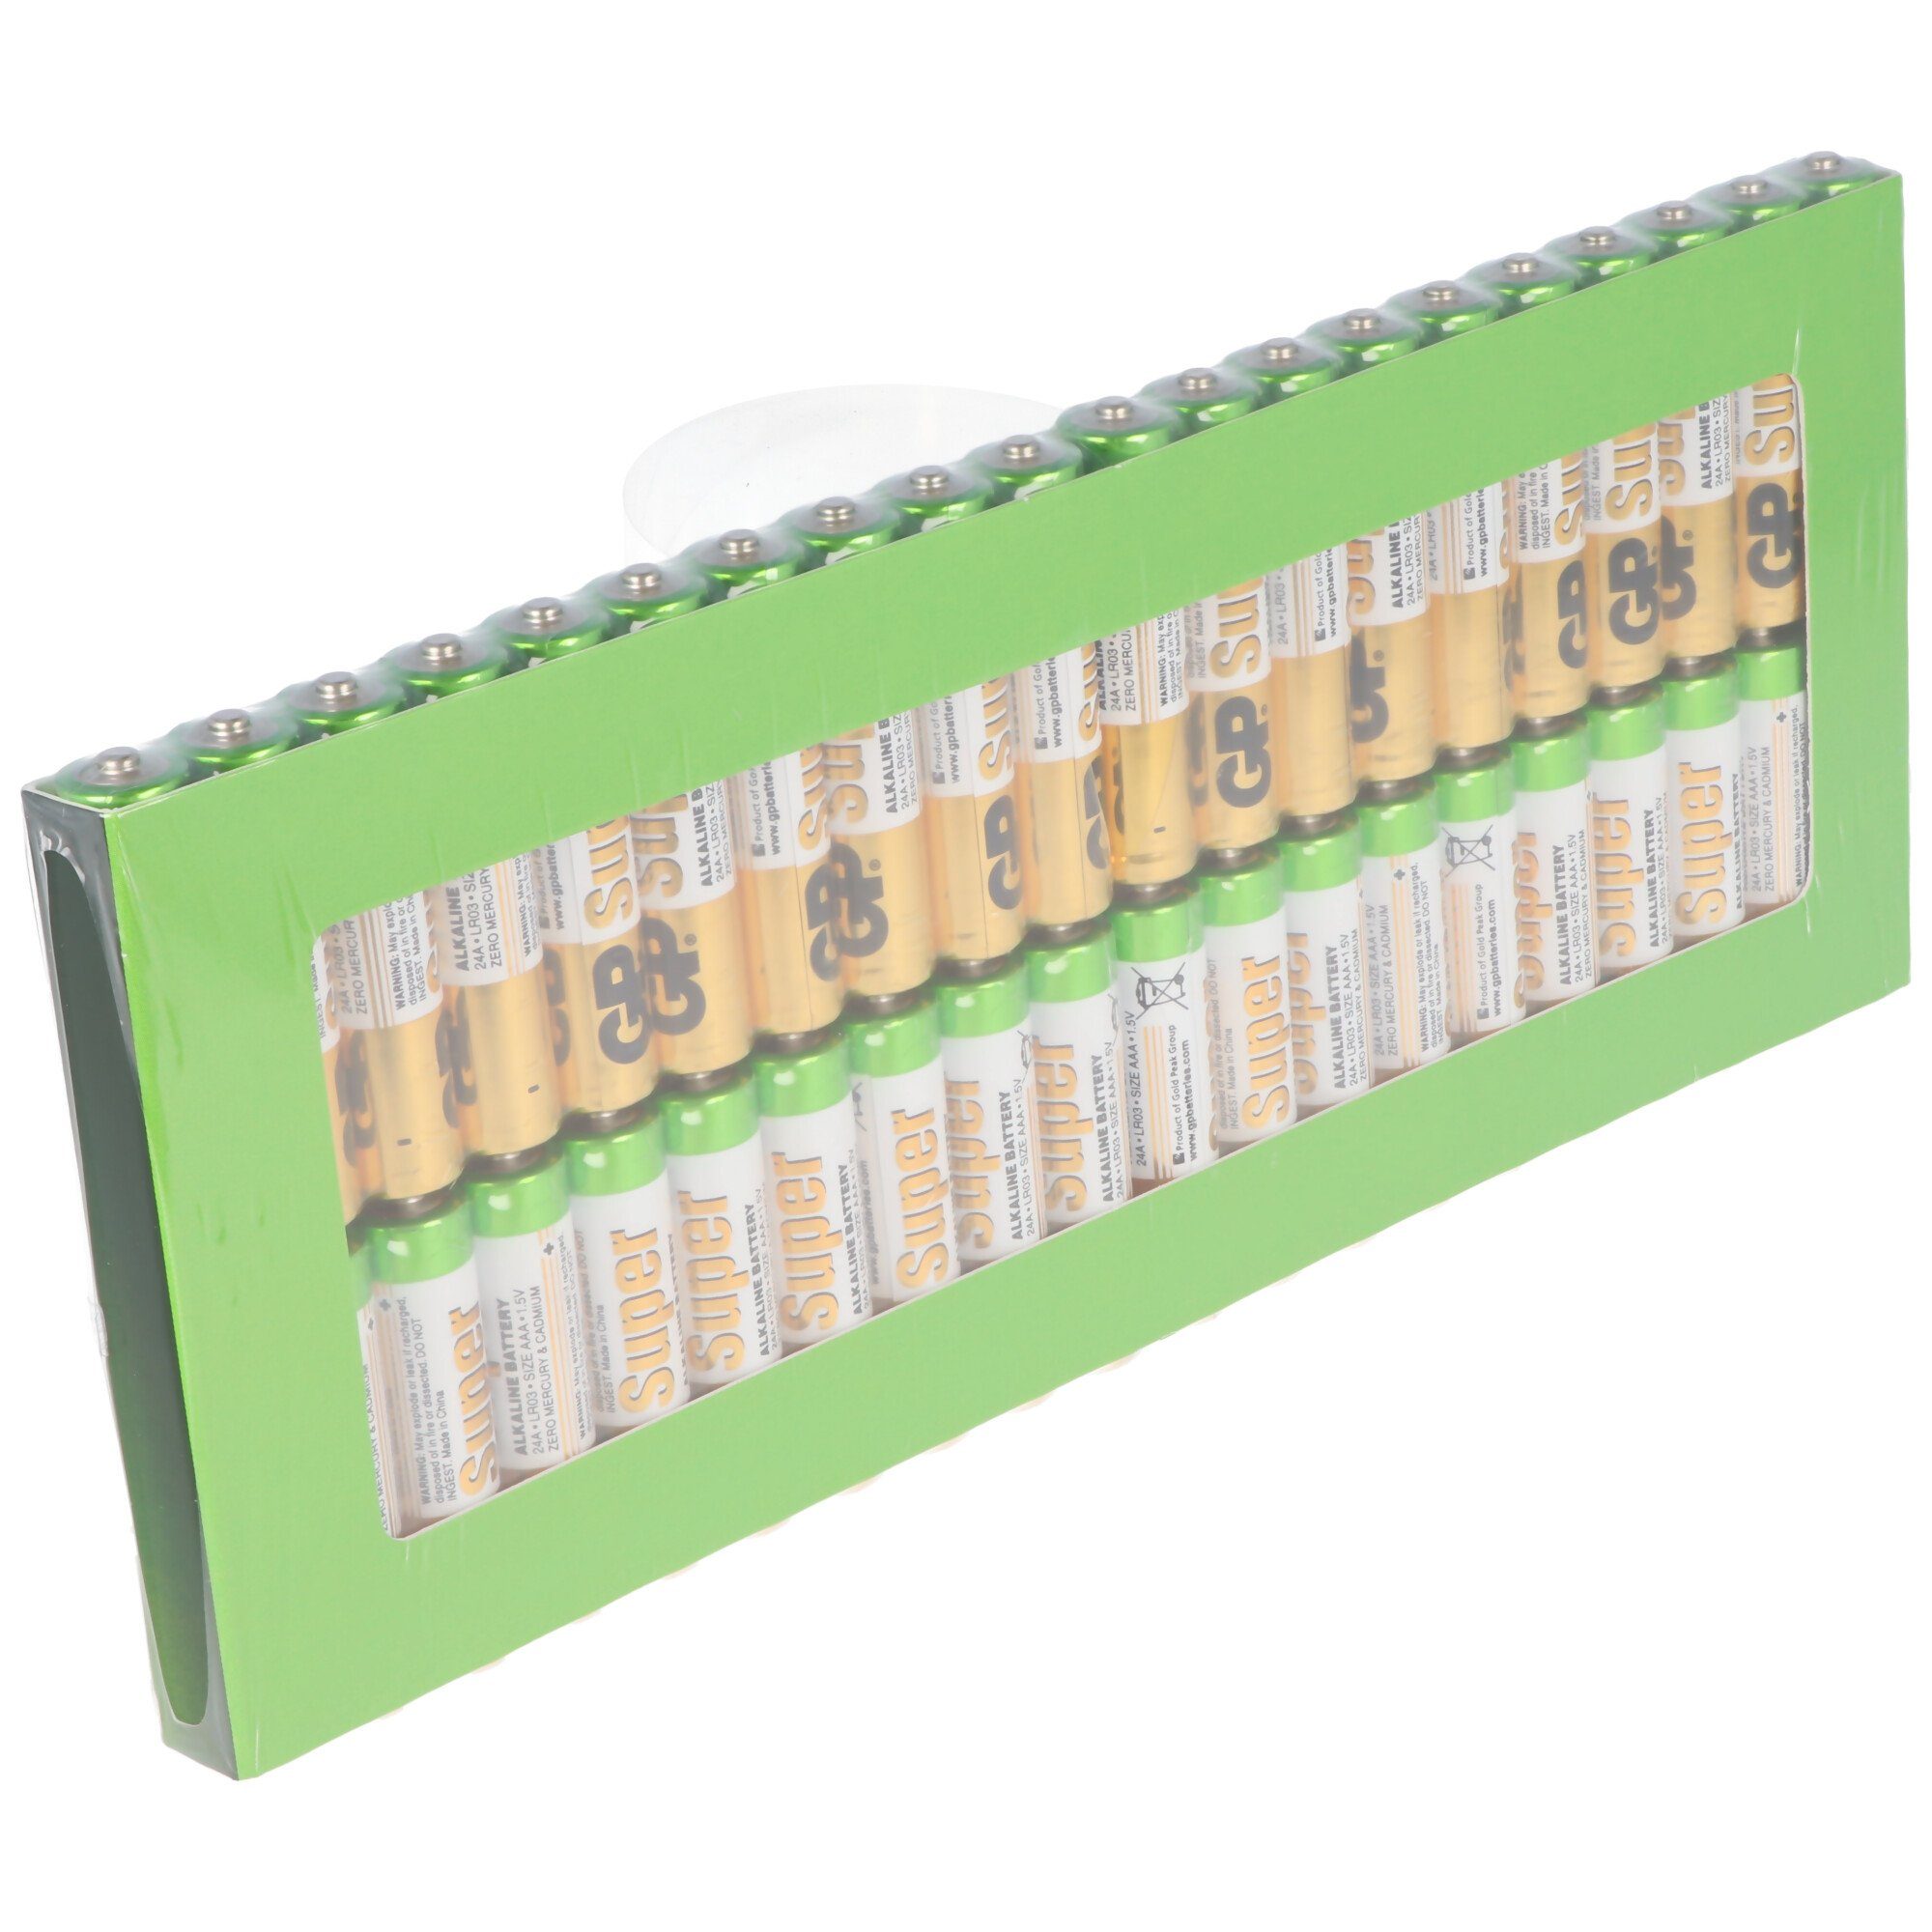 GP Super Stück Micro (1,5 GP Batteries V) 40 1,5V AAA Batterie, Alkaline Batterie